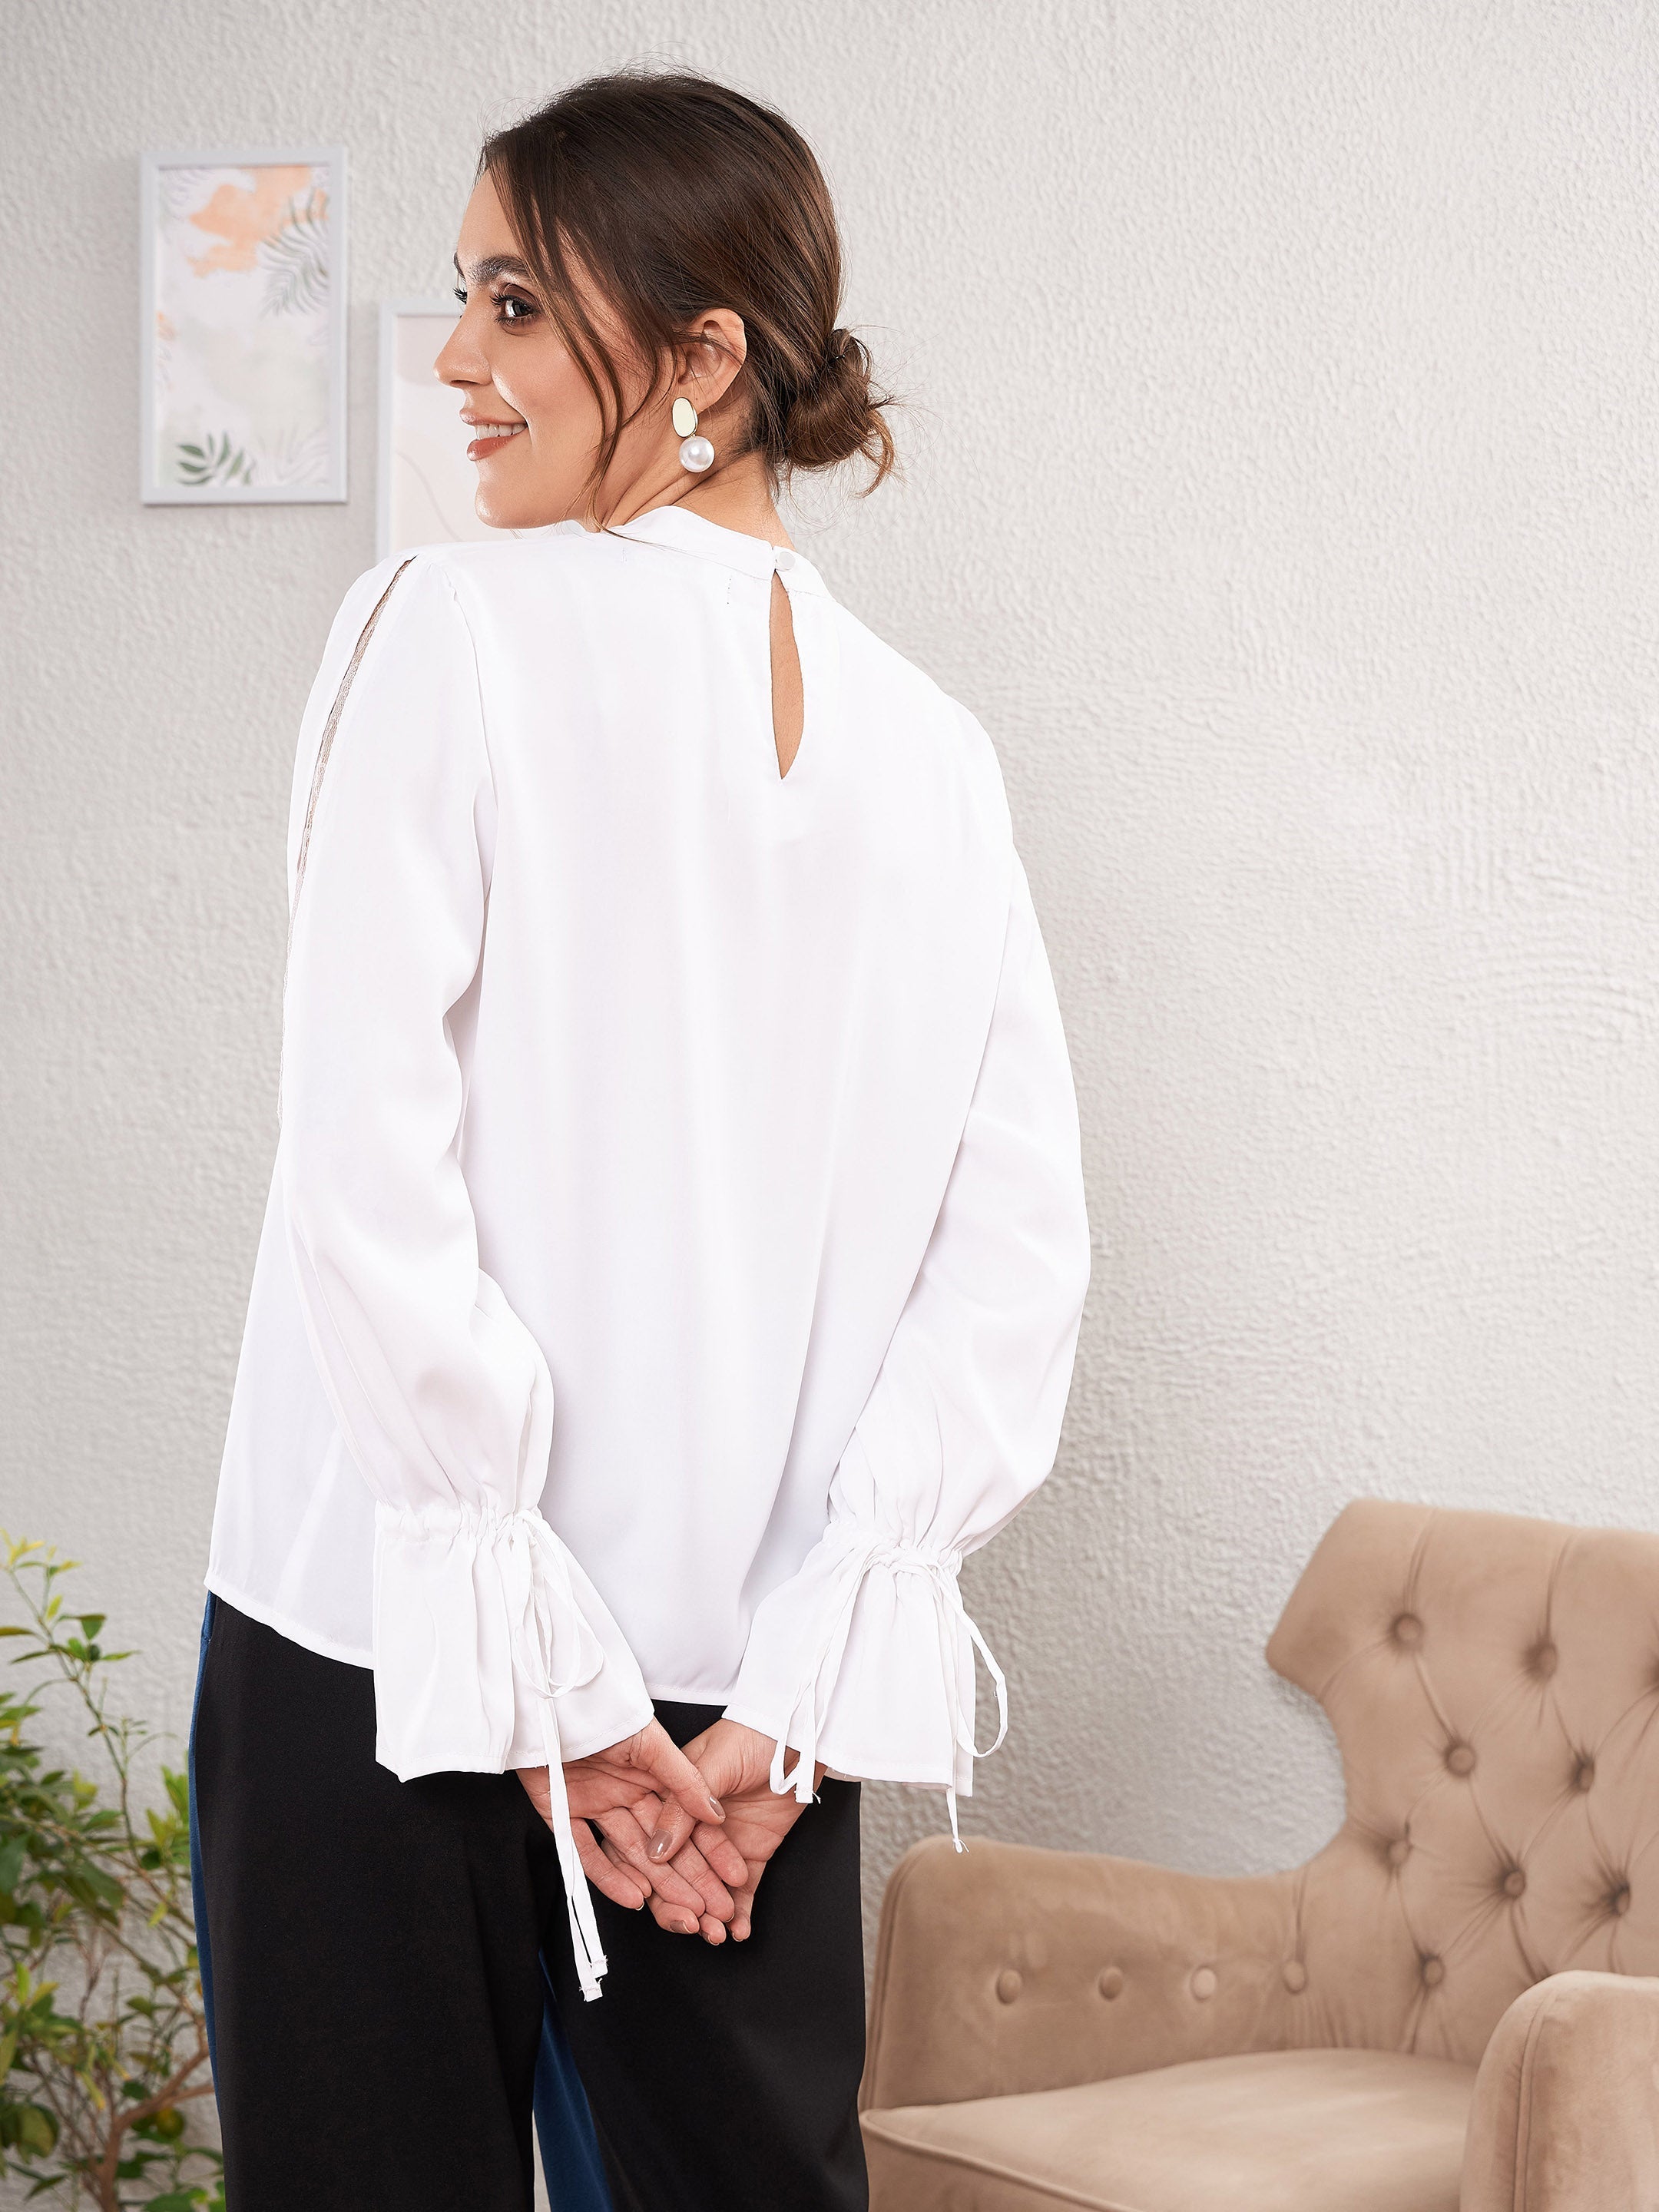 Women's White Satin Lace Detail Puff Sleeves Top - SASSAFRAS